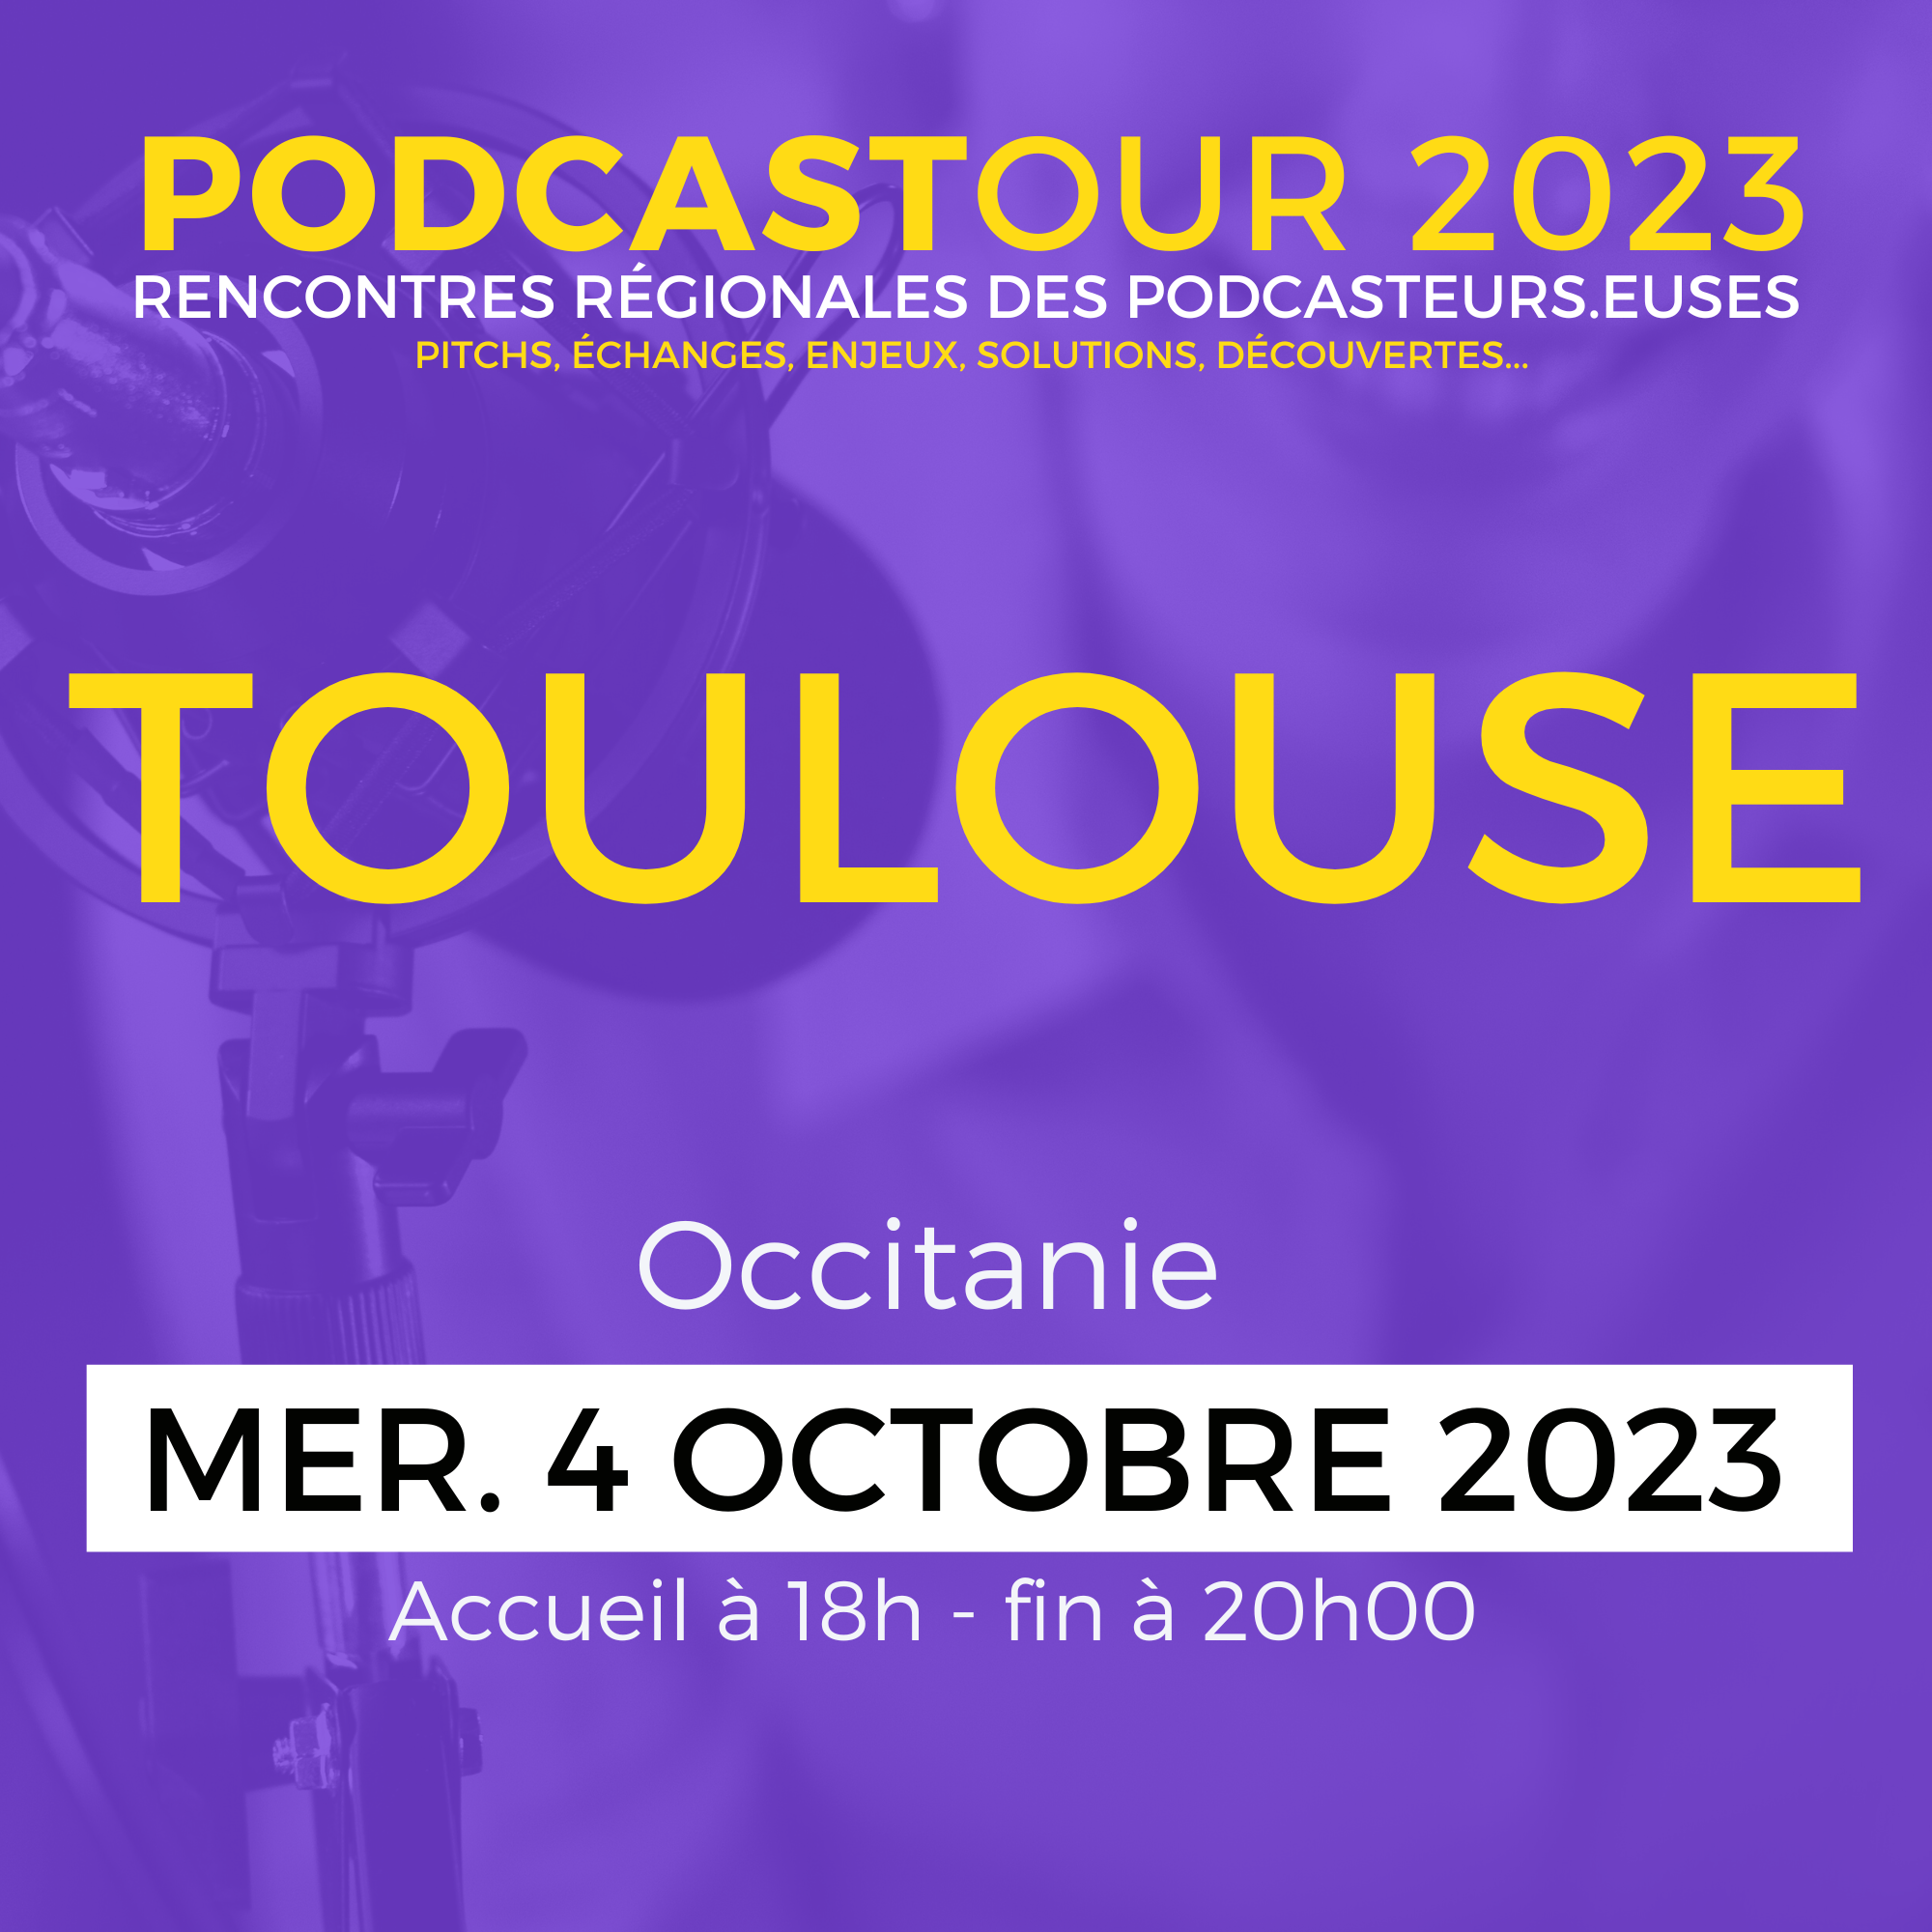 PodcasTour Toulouse